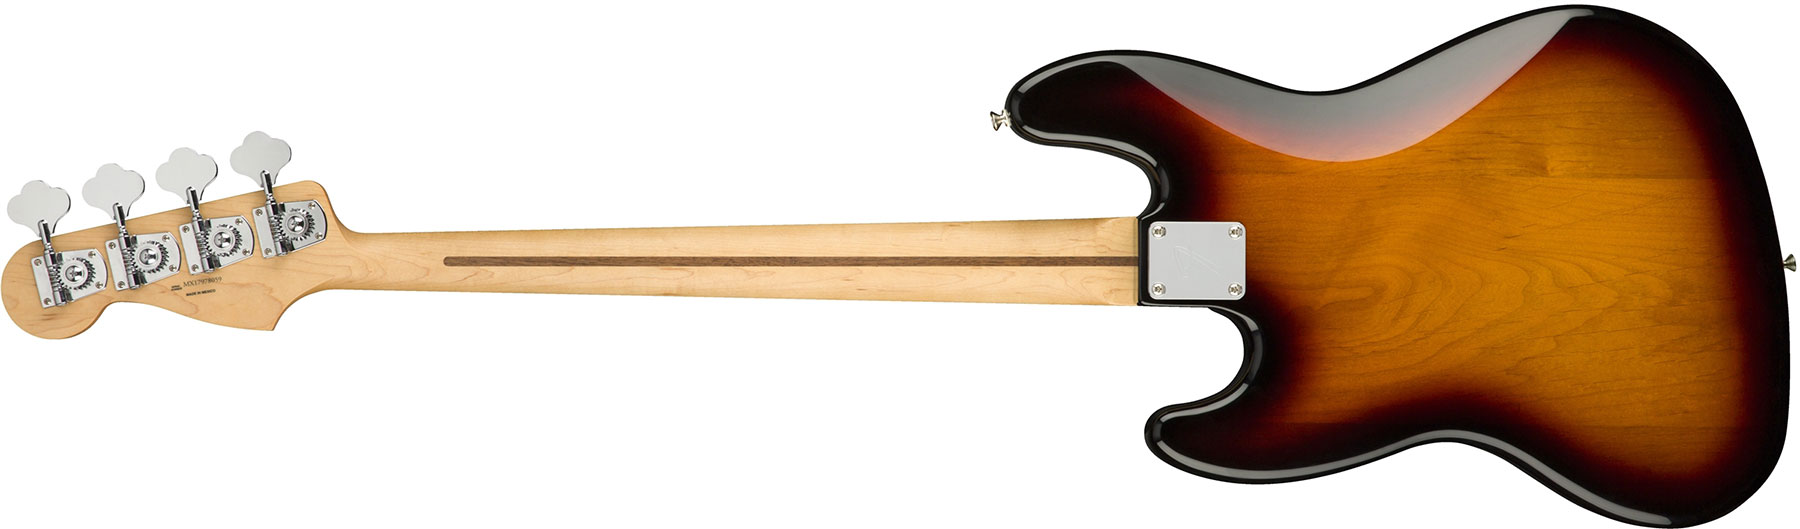 Fender Jazz Bass Player Fretless Mex Pf - 3-color Sunburst - Bajo eléctrico de cuerpo sólido - Variation 1